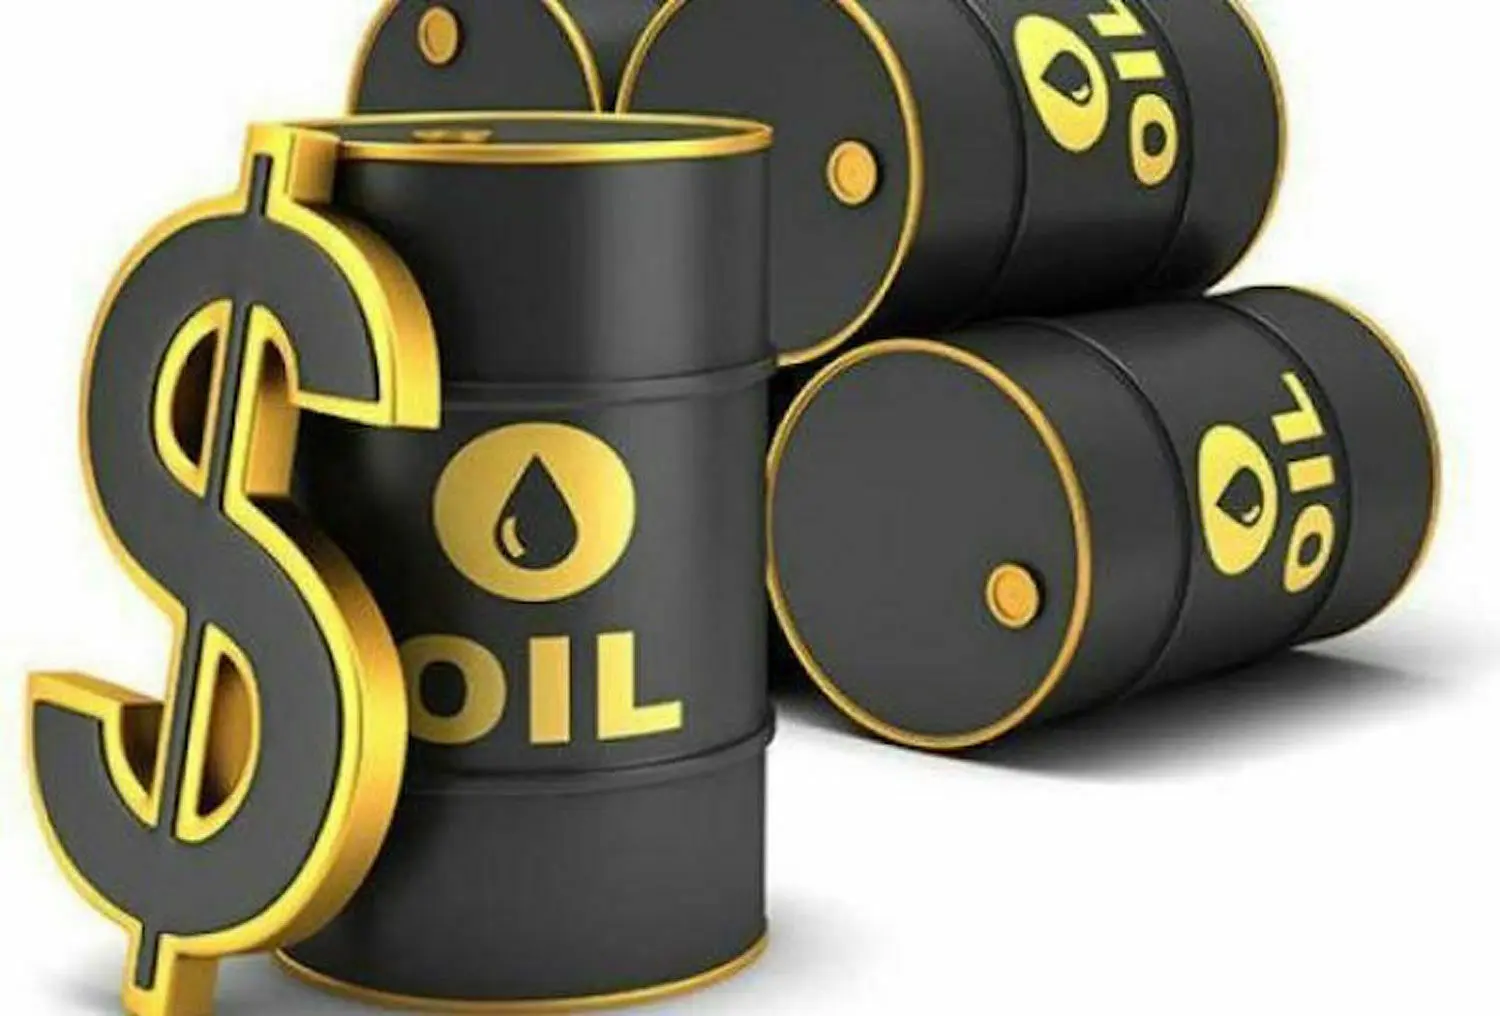 NNPC, Aiteo Joint Venture Launches Nembe Crude Oil Grade